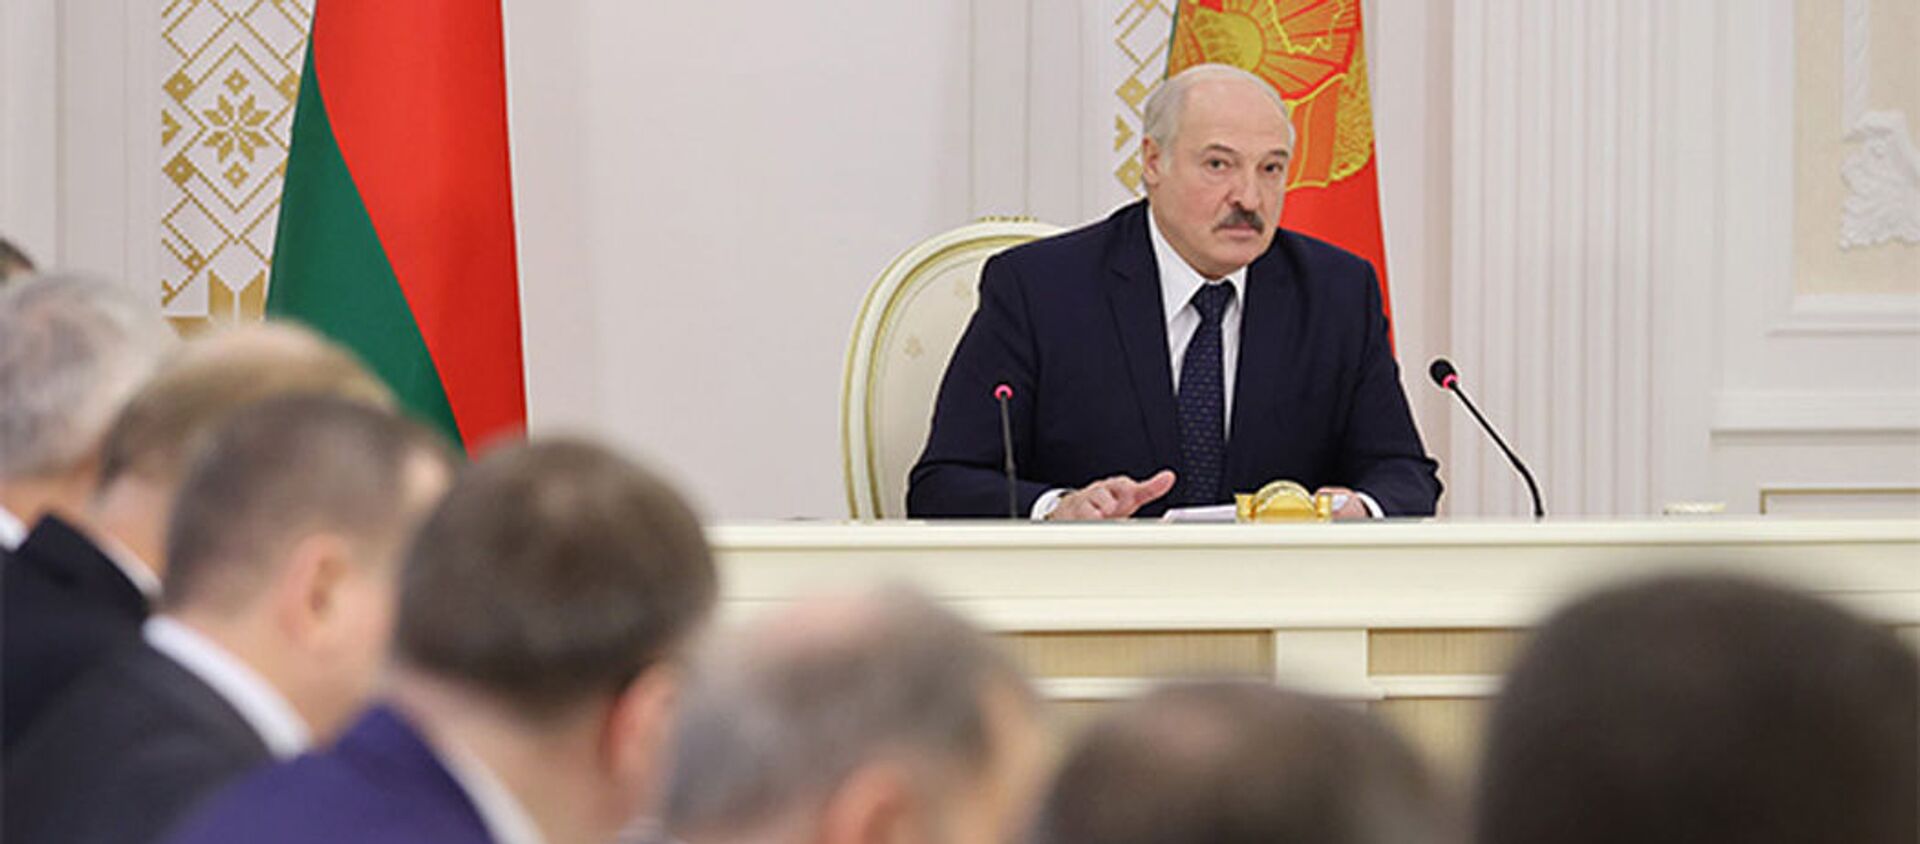 Президент Беларуси Александр Лукашенко - Sputnik Беларусь, 1920, 07.12.2020